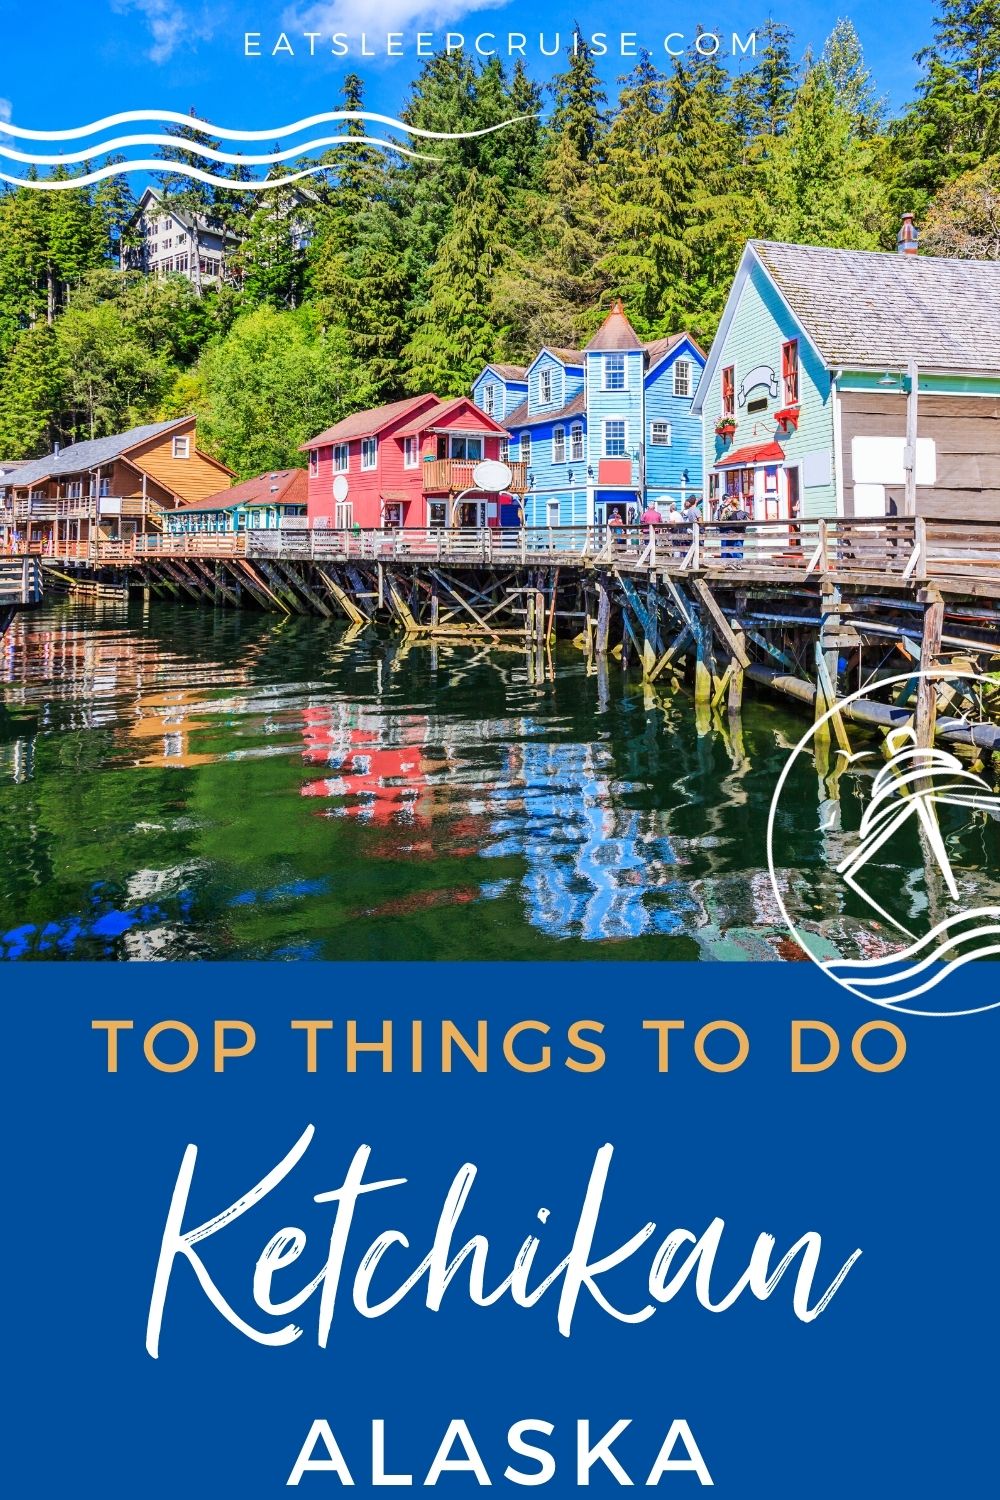 Top Things to Do in Ketchikan, Alaska